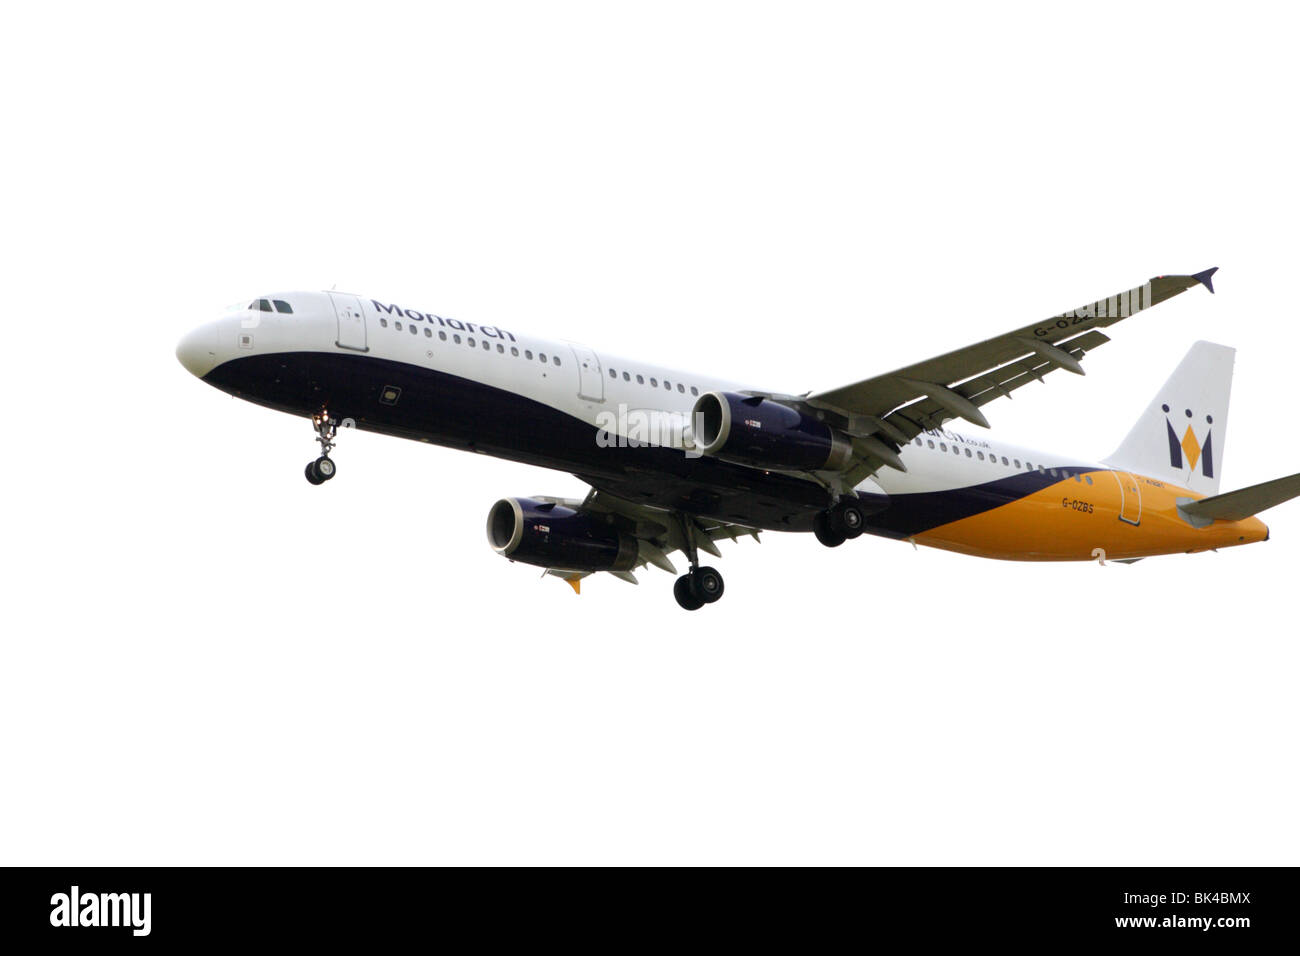 Monarch passenger airplane Airbus A321 landing, Great Britain, 2010 Stock Photo